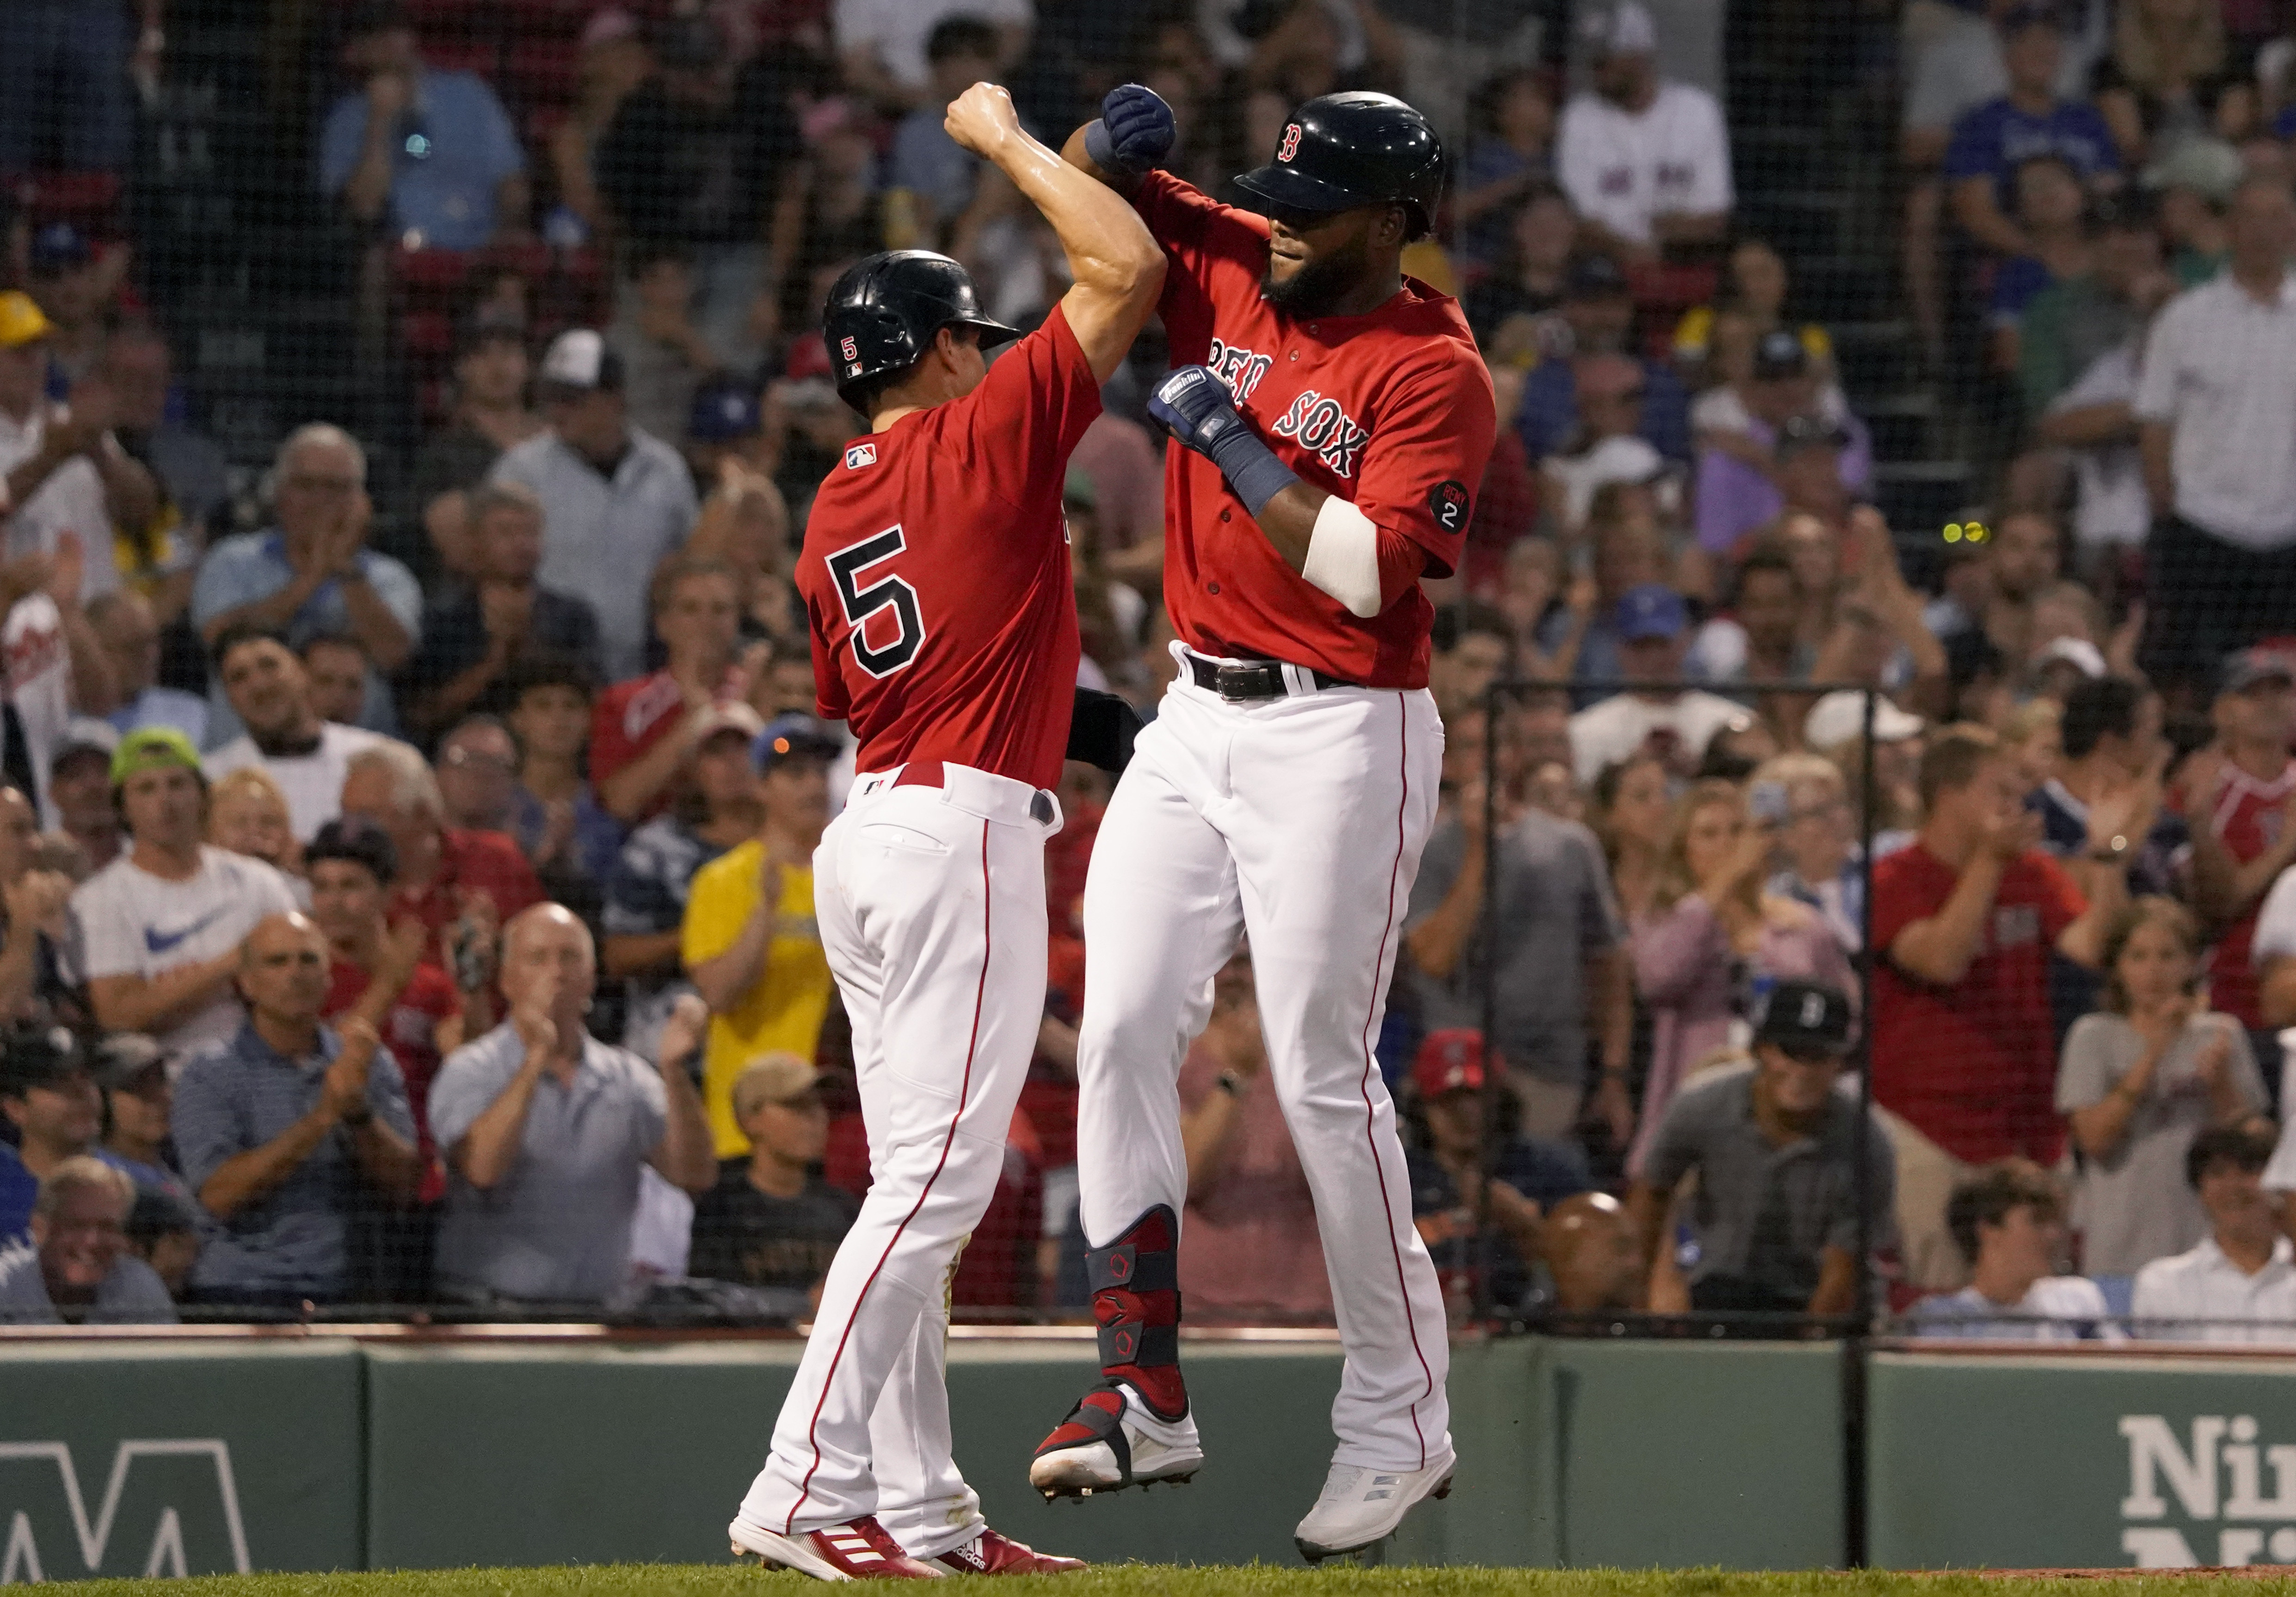 Boston Red Sox vs. Tampa Bay Rays 4/22/22 - MLB Live Stream on Watch ESPN